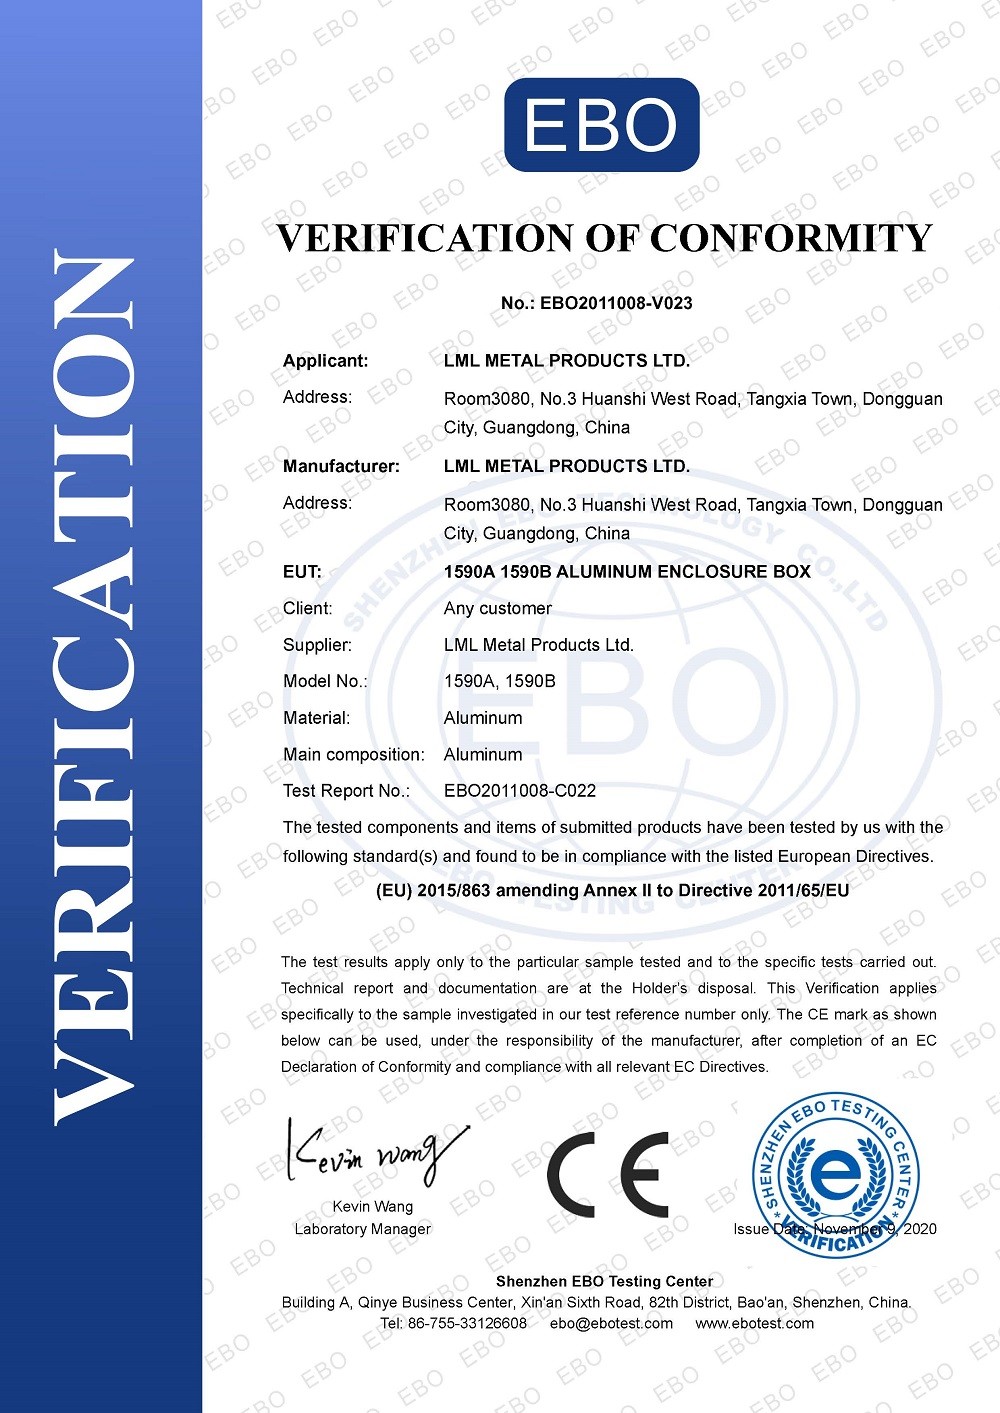 Verification of conformity  CE